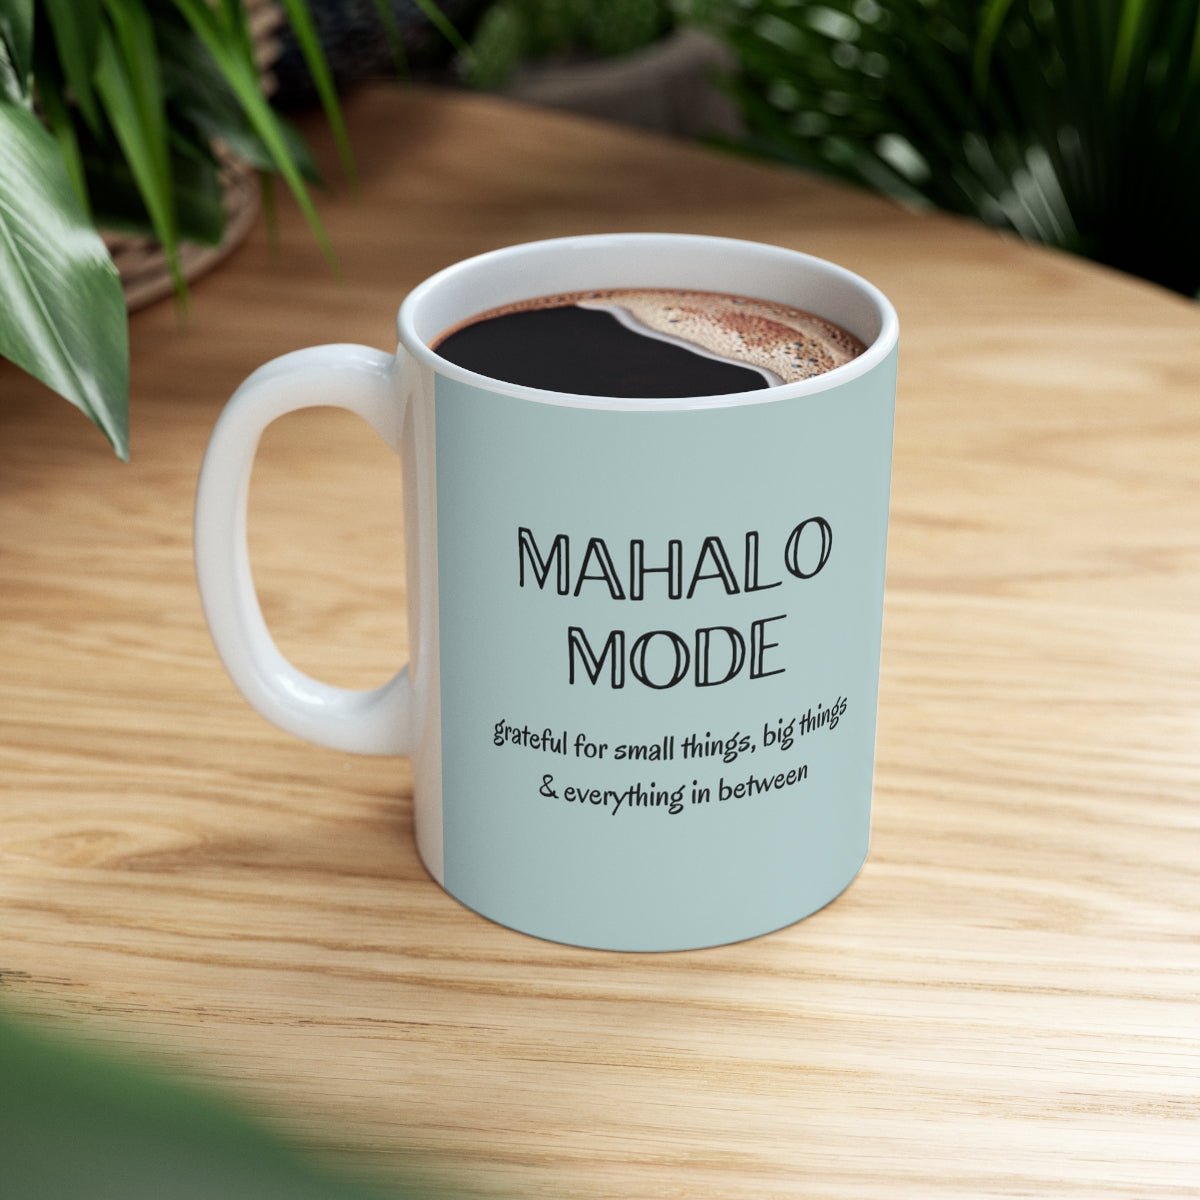 11oz Mug Mahalo Mode Solid Global Village Kailua Boutique